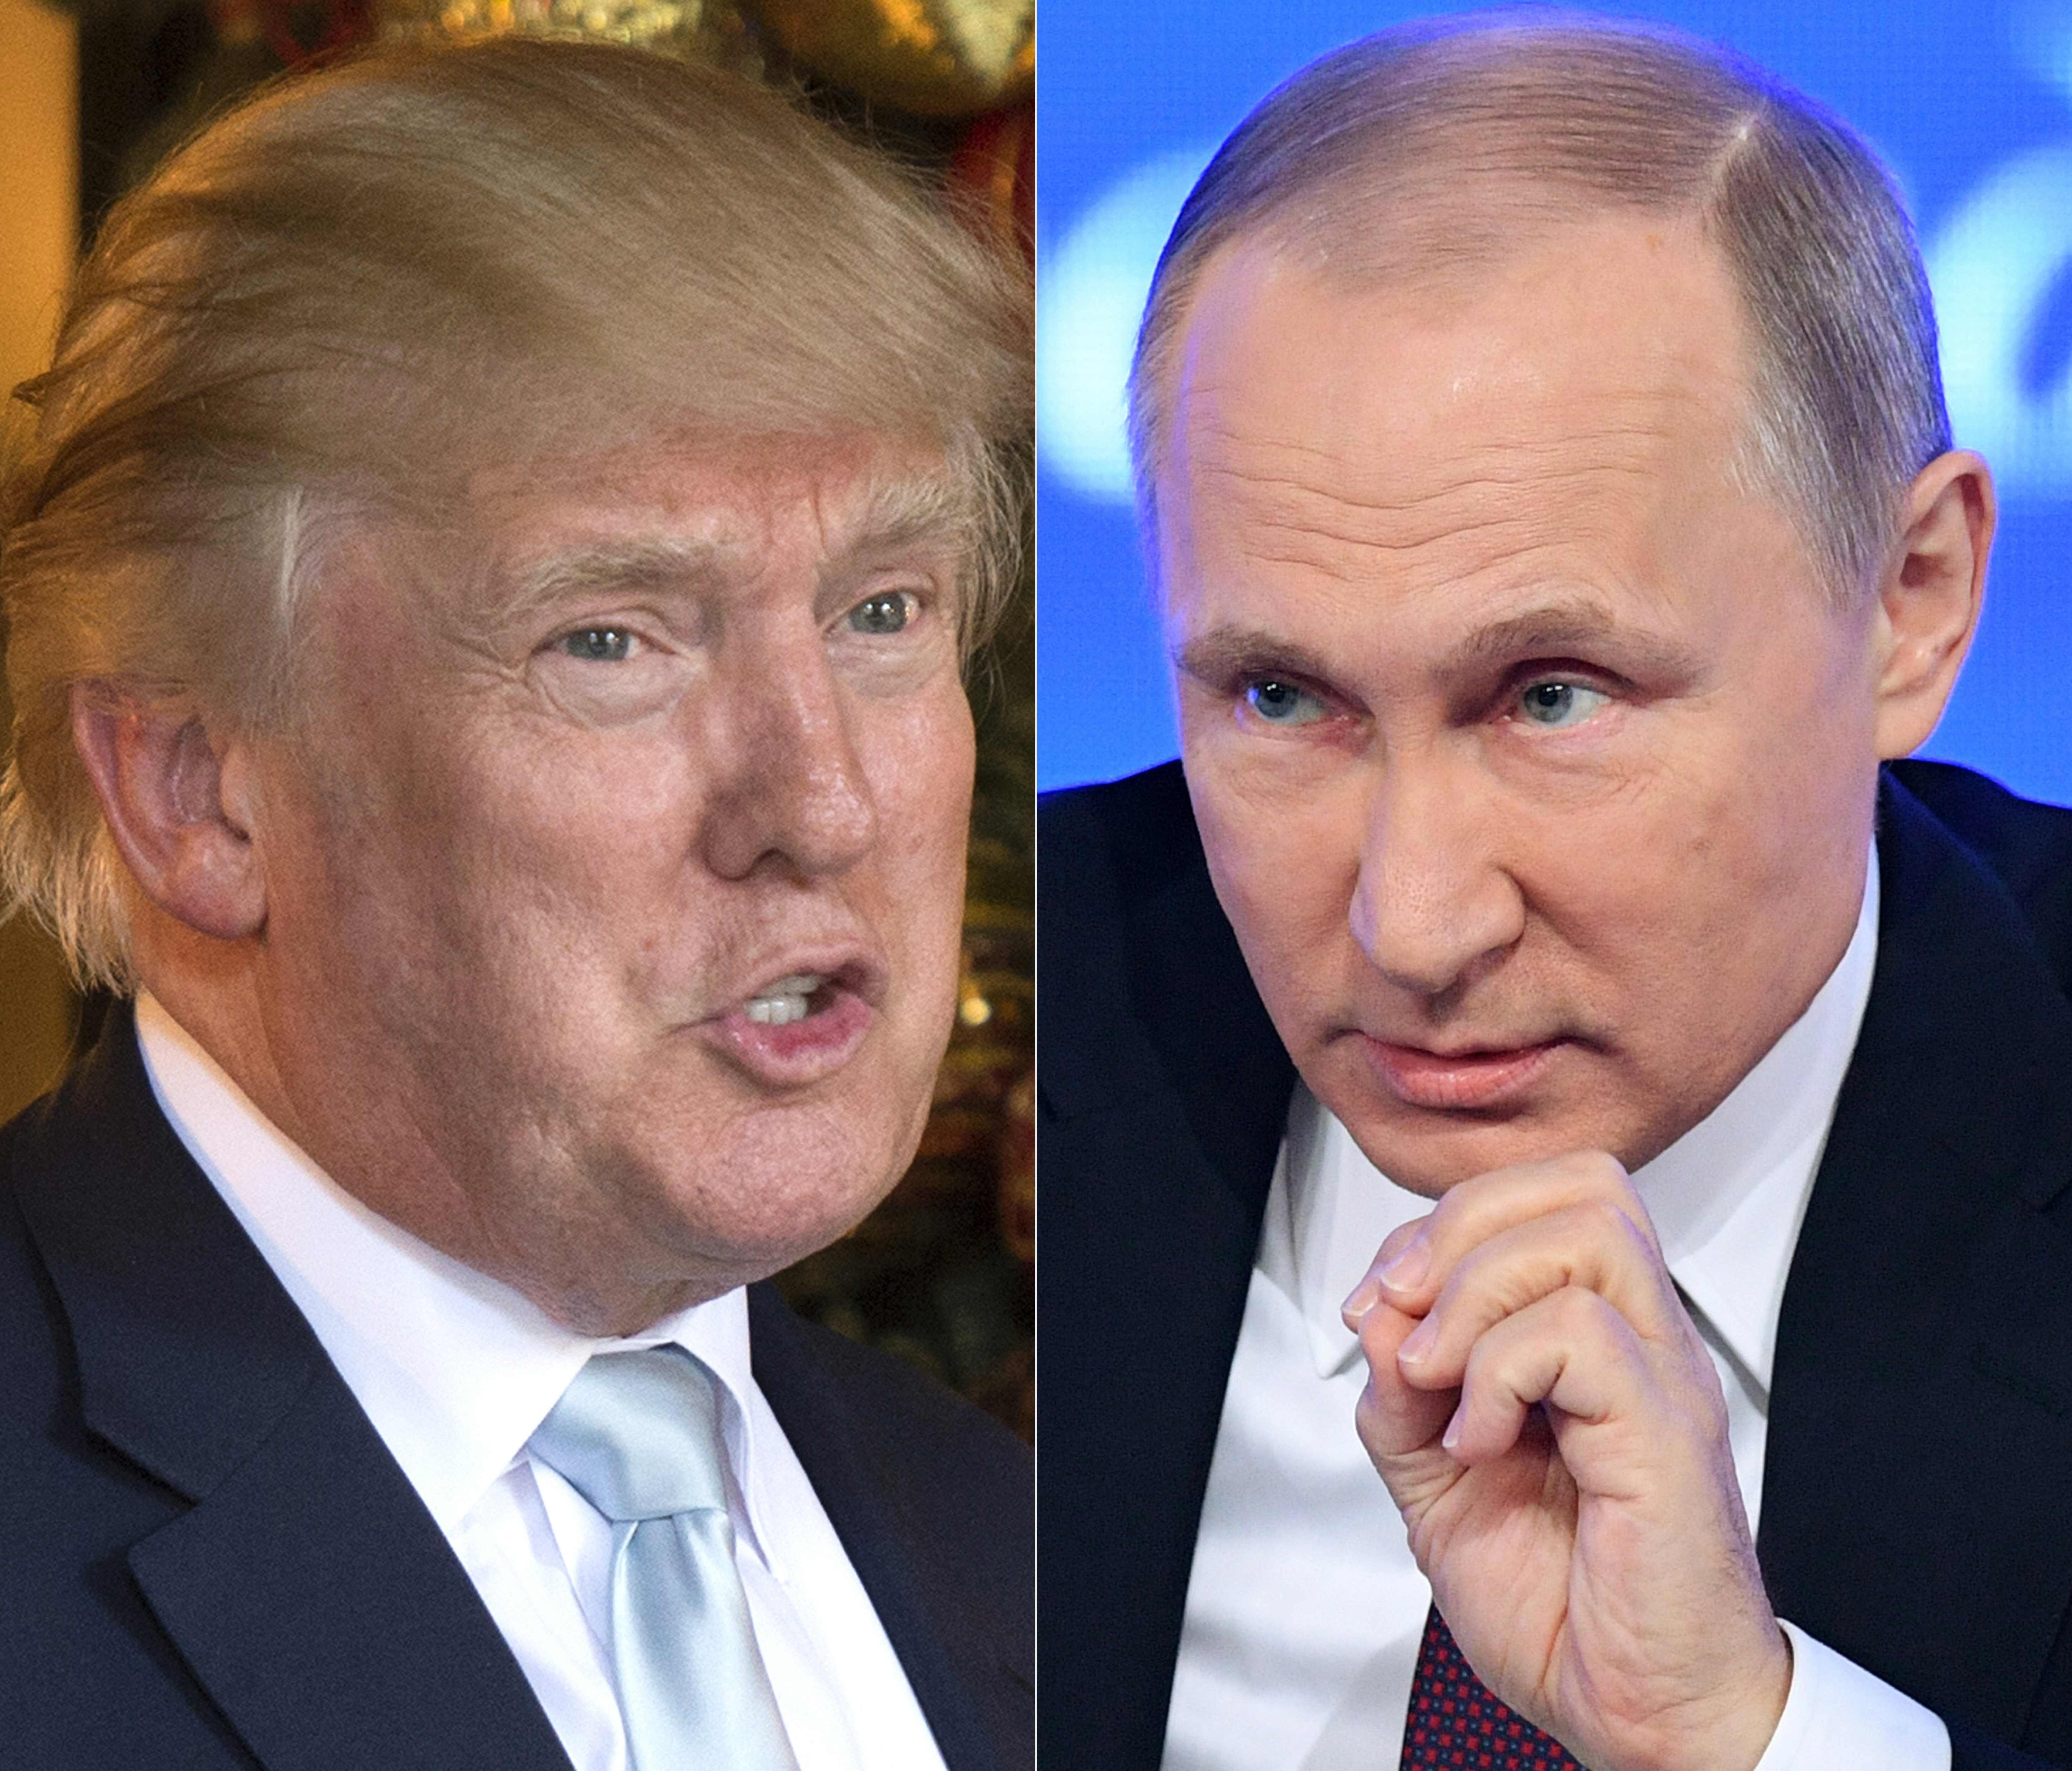 President Trump and Russian President Vladimir Putin.